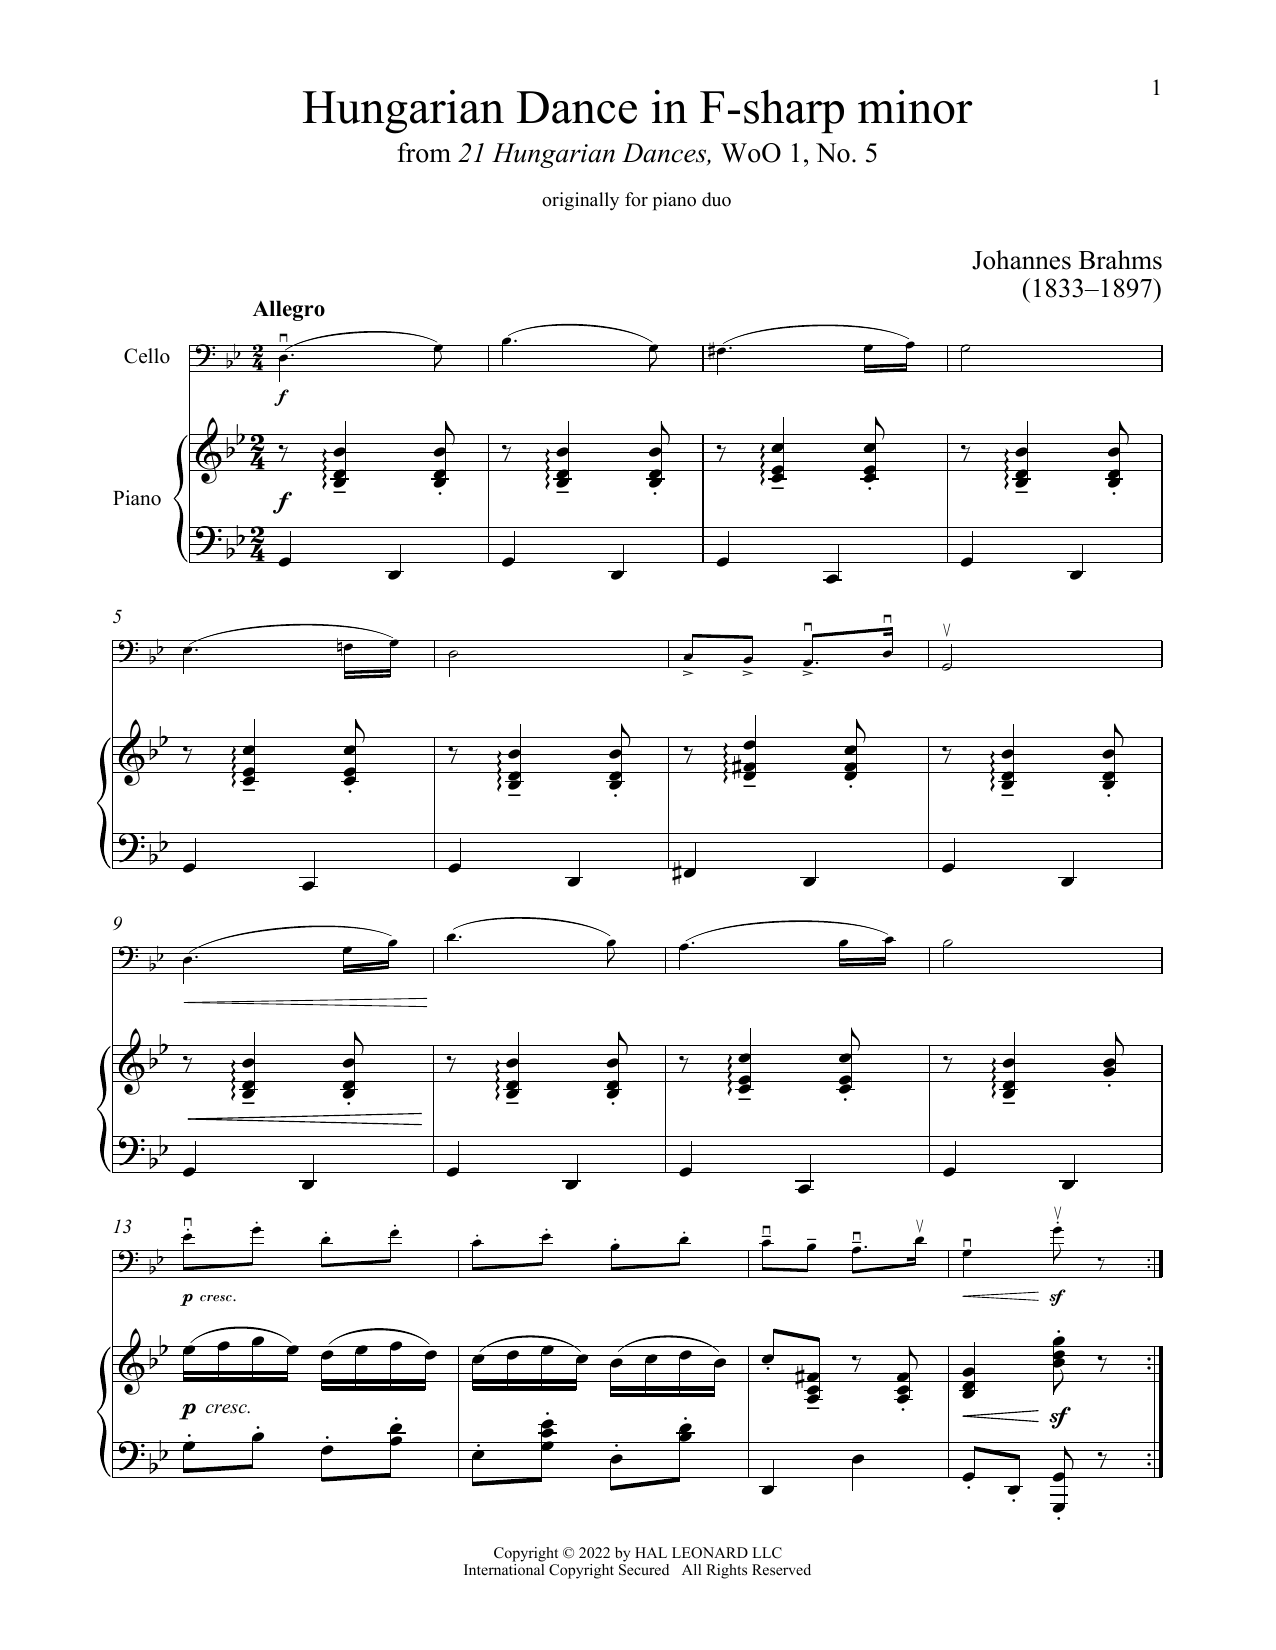 Download Johannes Brahms Hungarian Dance No. 5 Sheet Music